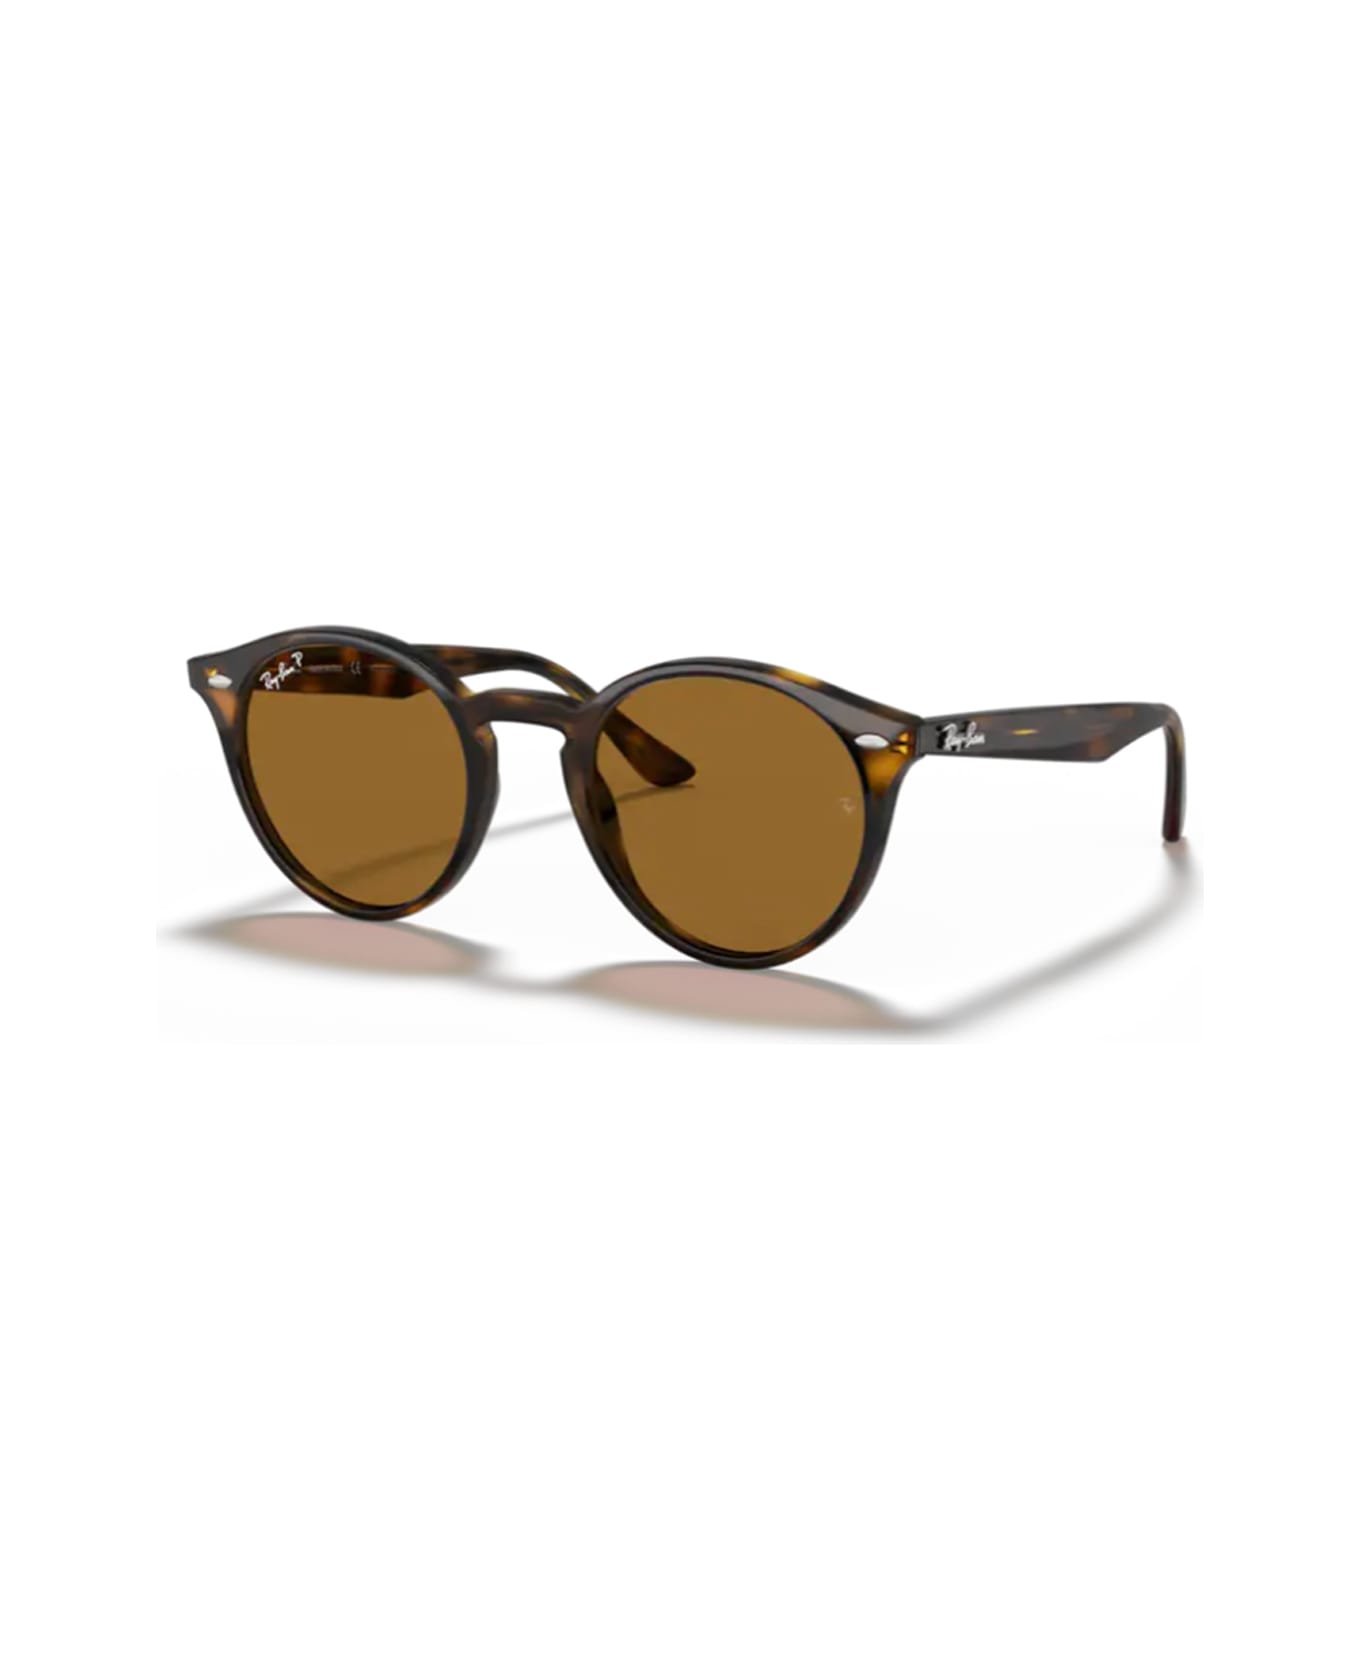 Ray-Ban Rb2180 Sunglasses - Marrone サングラス